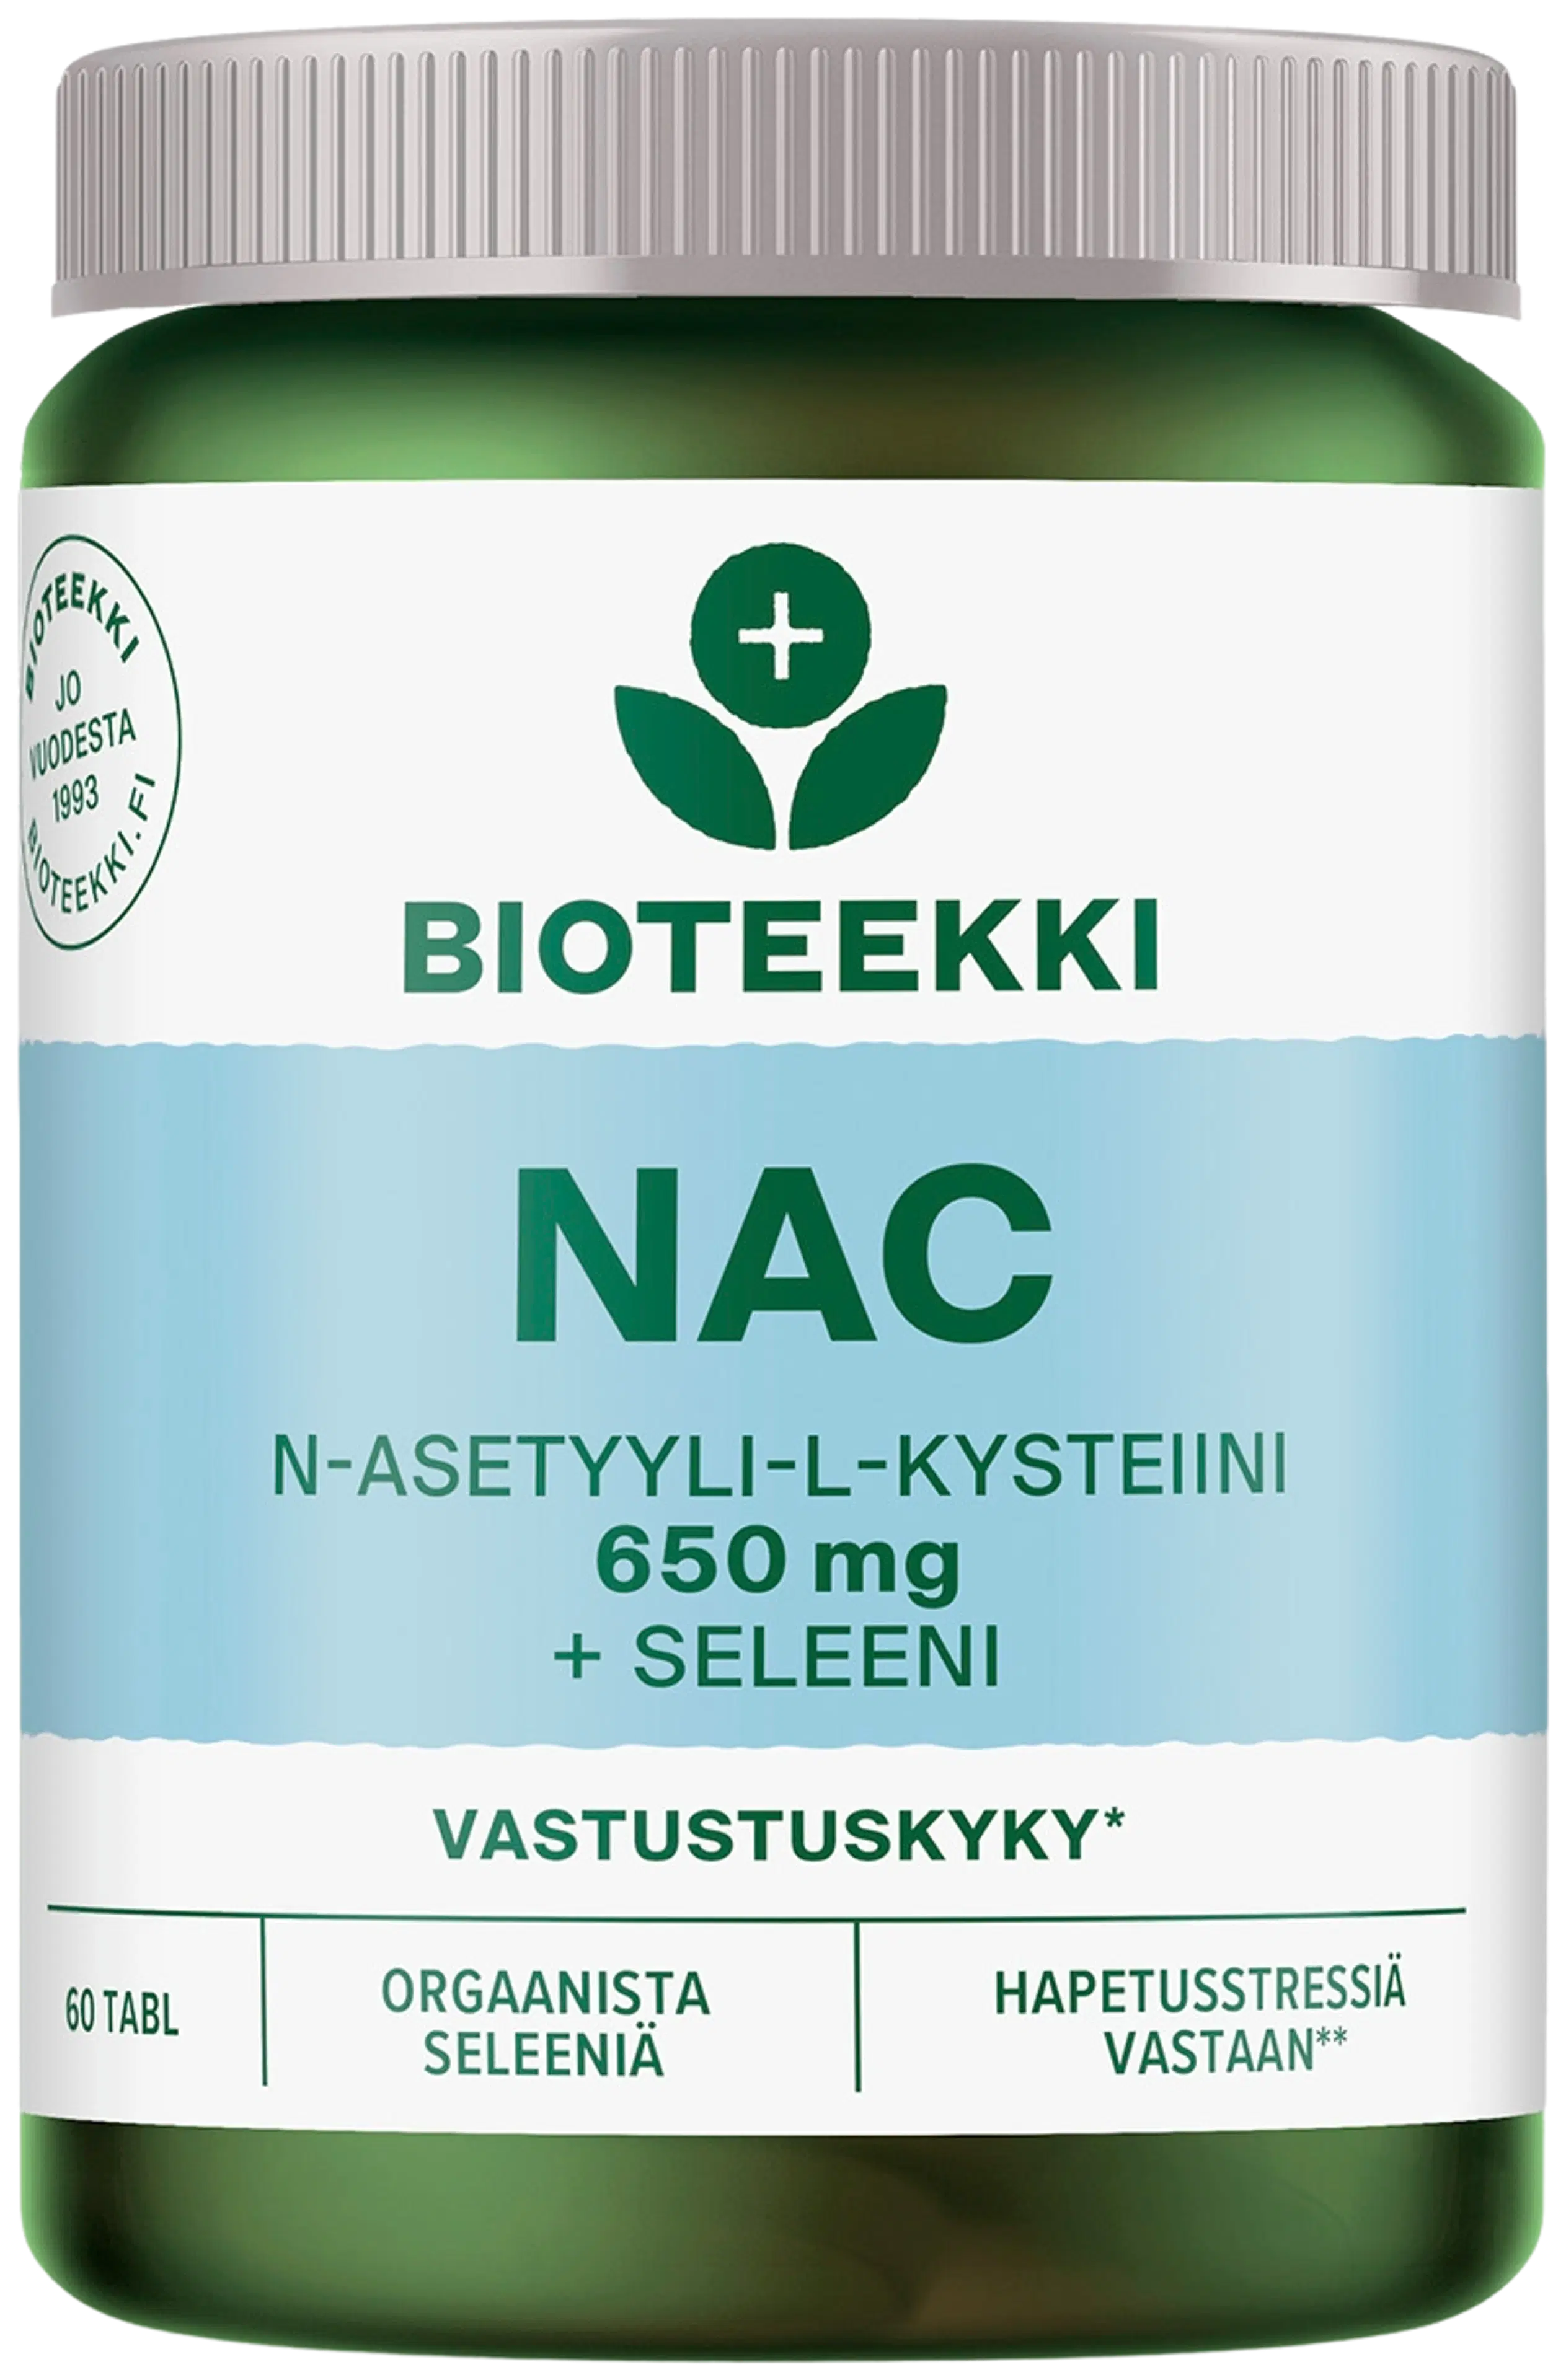 Bioteekki NAC 650 mg + Seleeni ravintolisä 60 tabl.